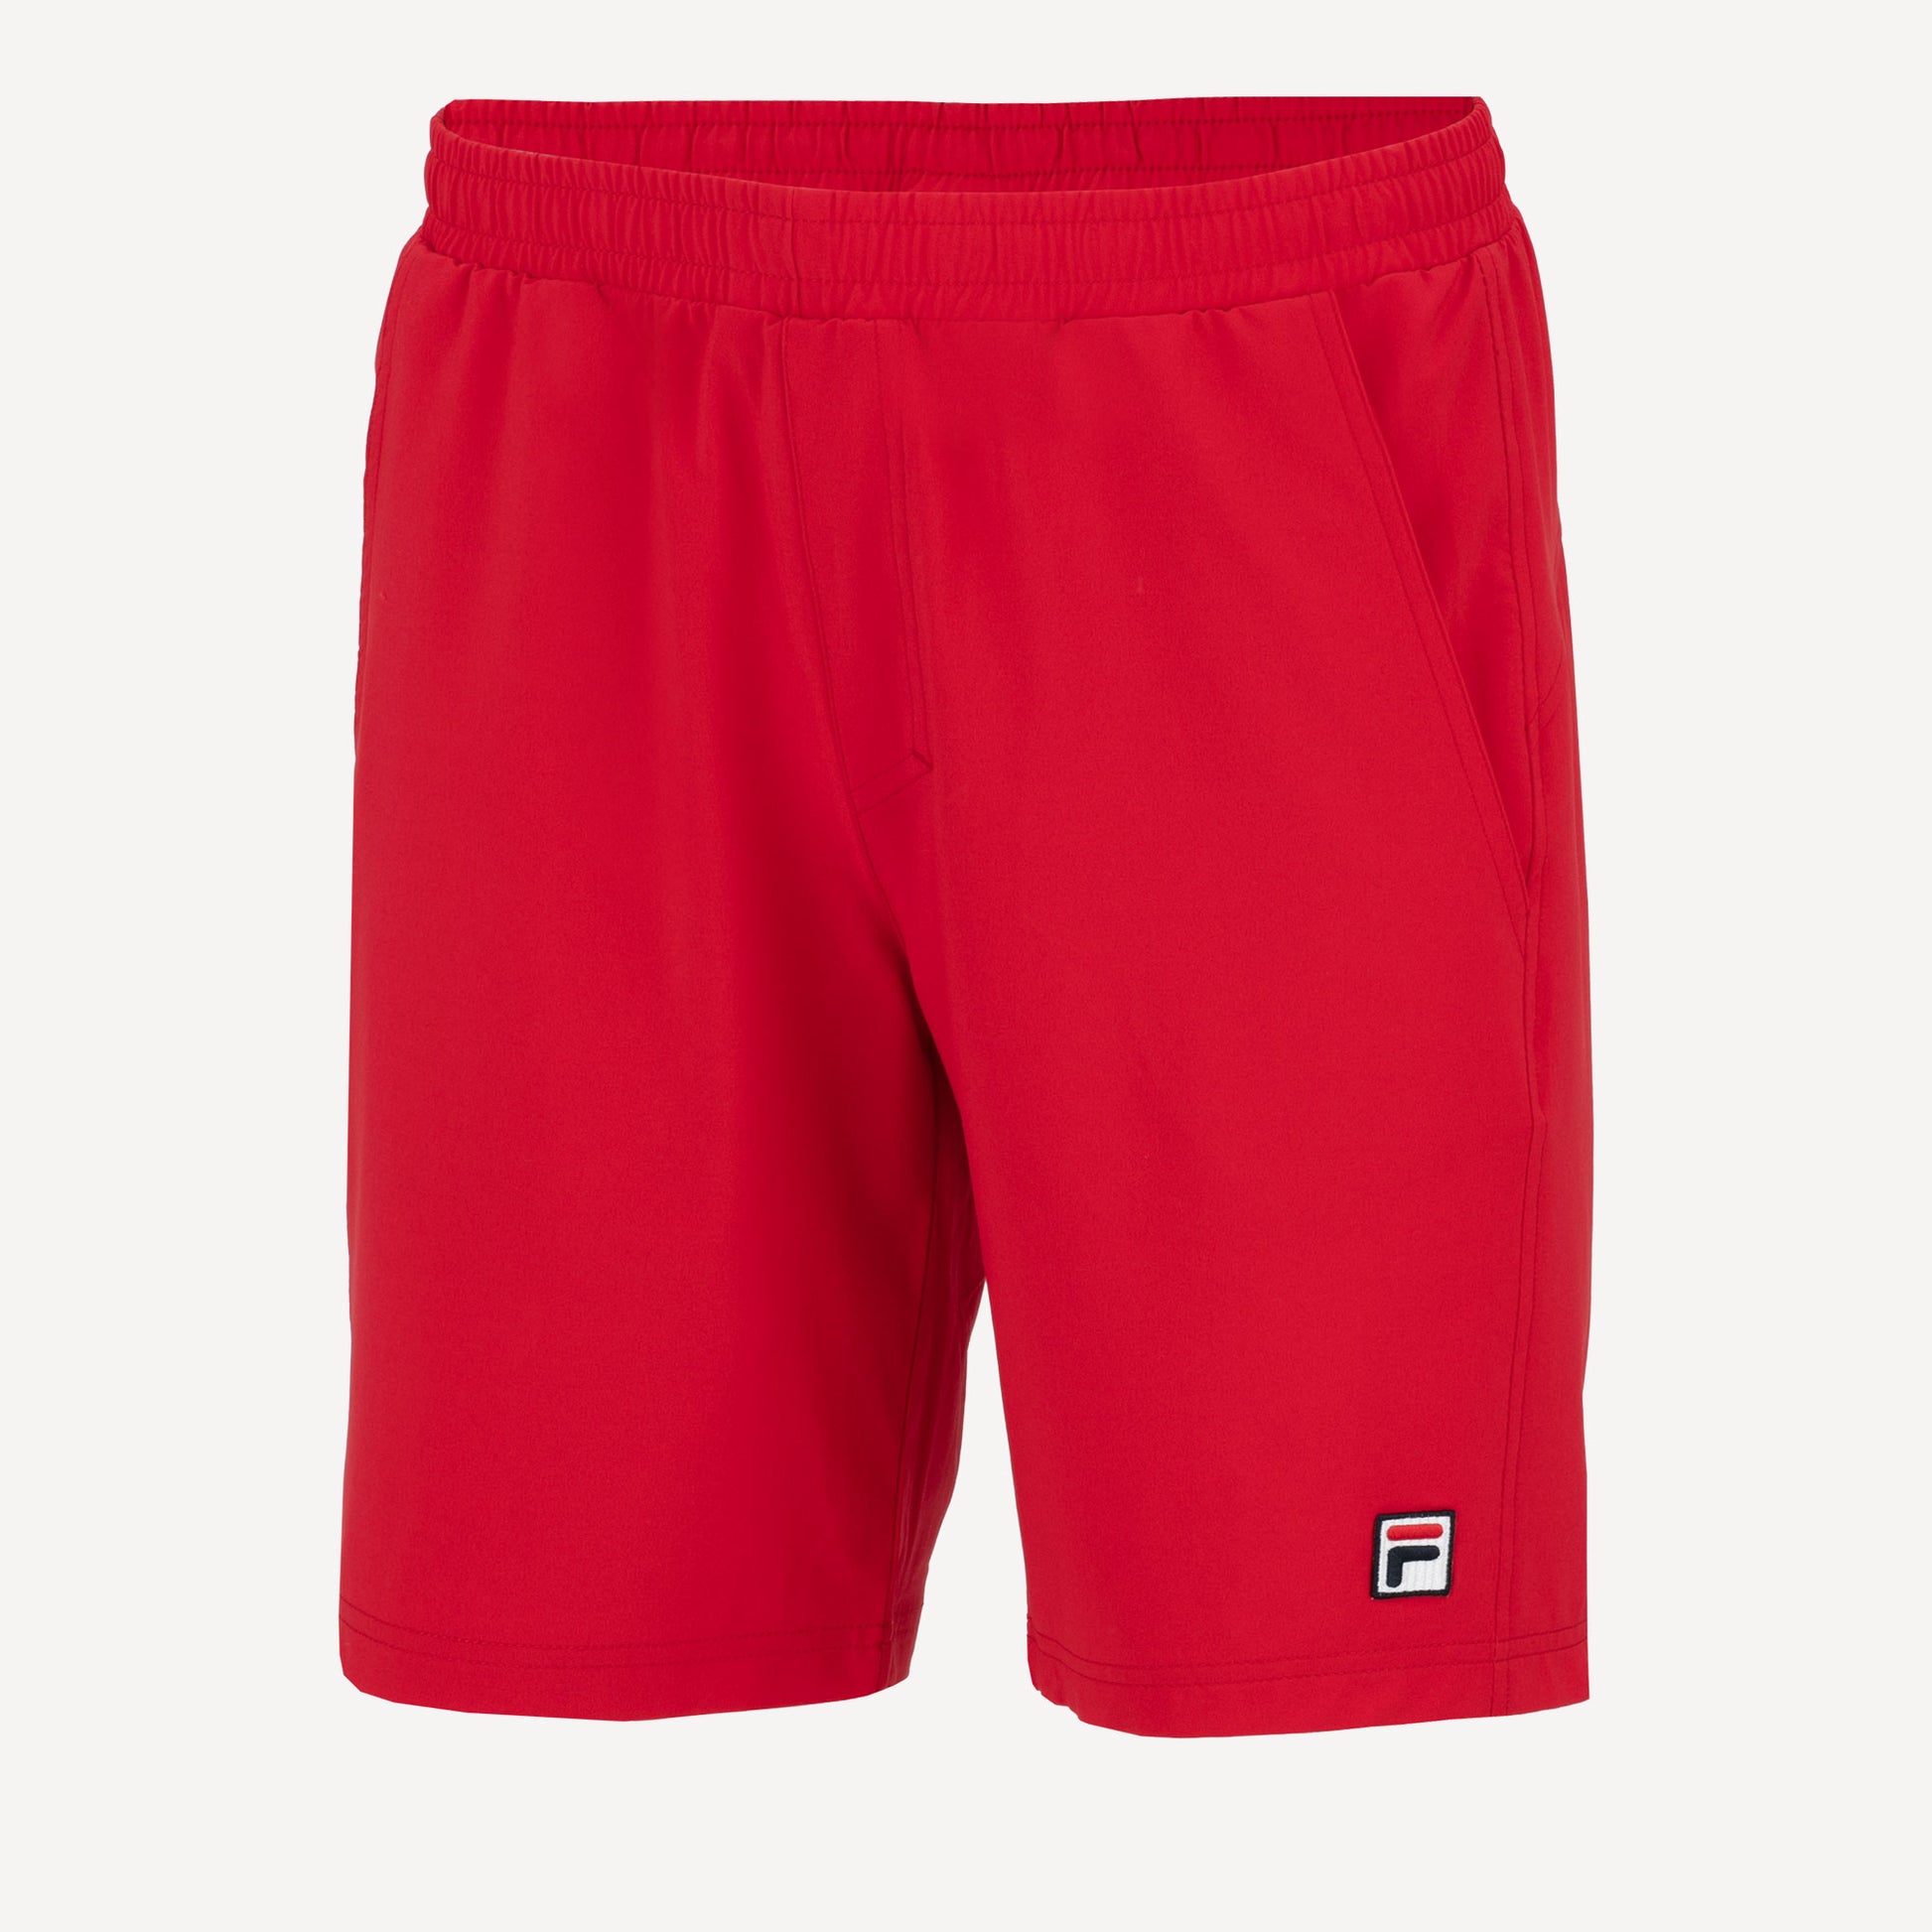 Fila Santana Men's Tennis Shorts Red (1)